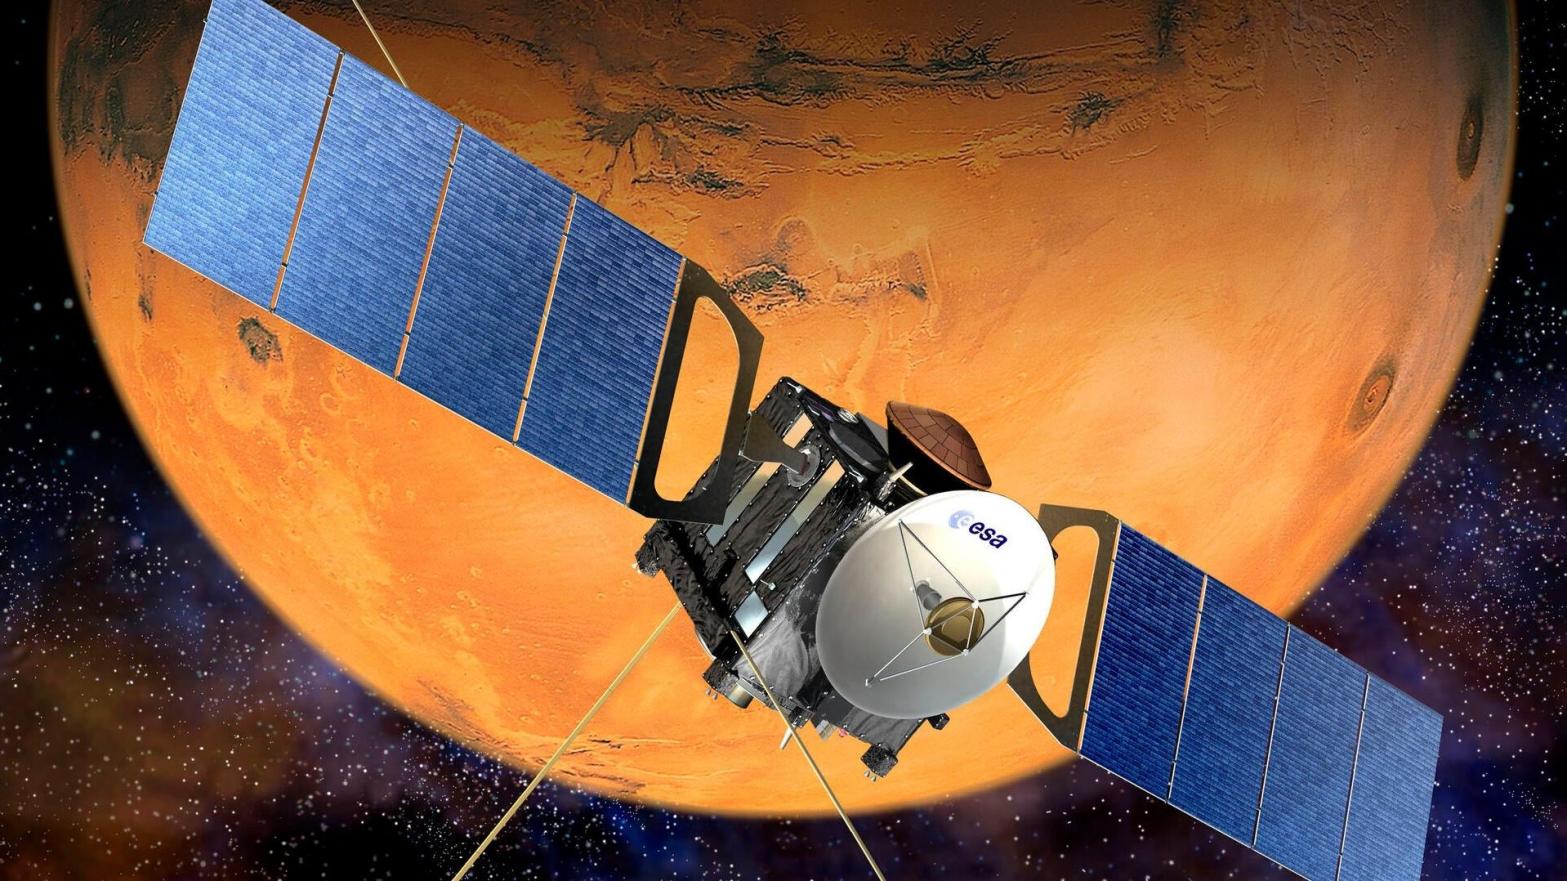 An artist's impression of the Mars Express spacecraft. (Illustration: ESA)